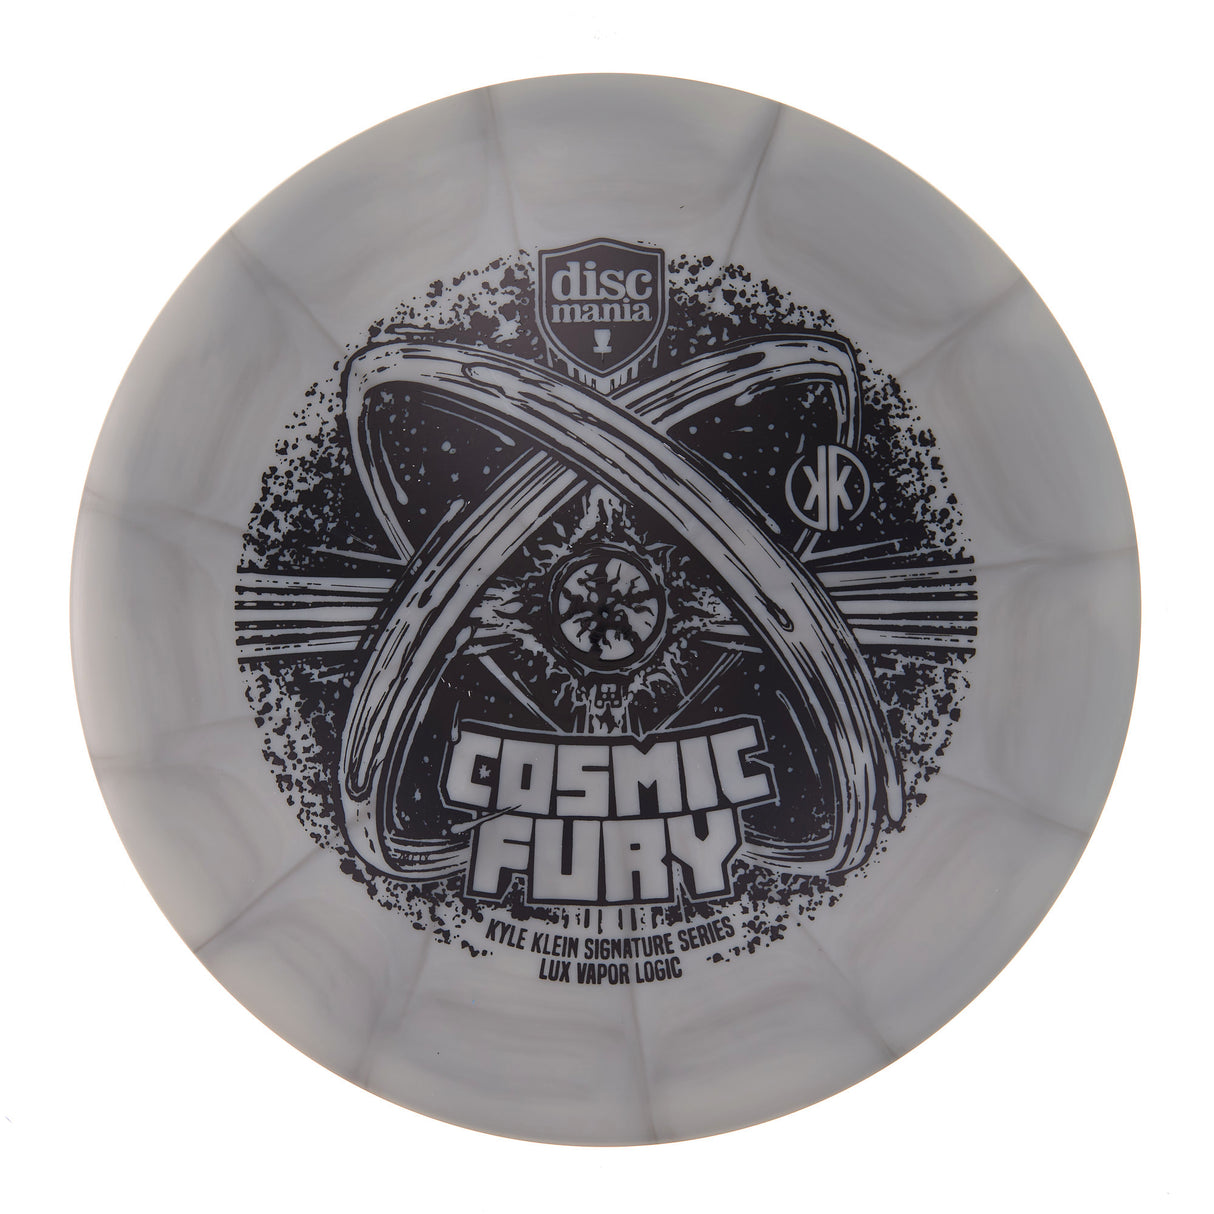 Discmania Logic - Cosmic Fury Kyle Klein Signature Series Lux Vapor 176g | Style 0014